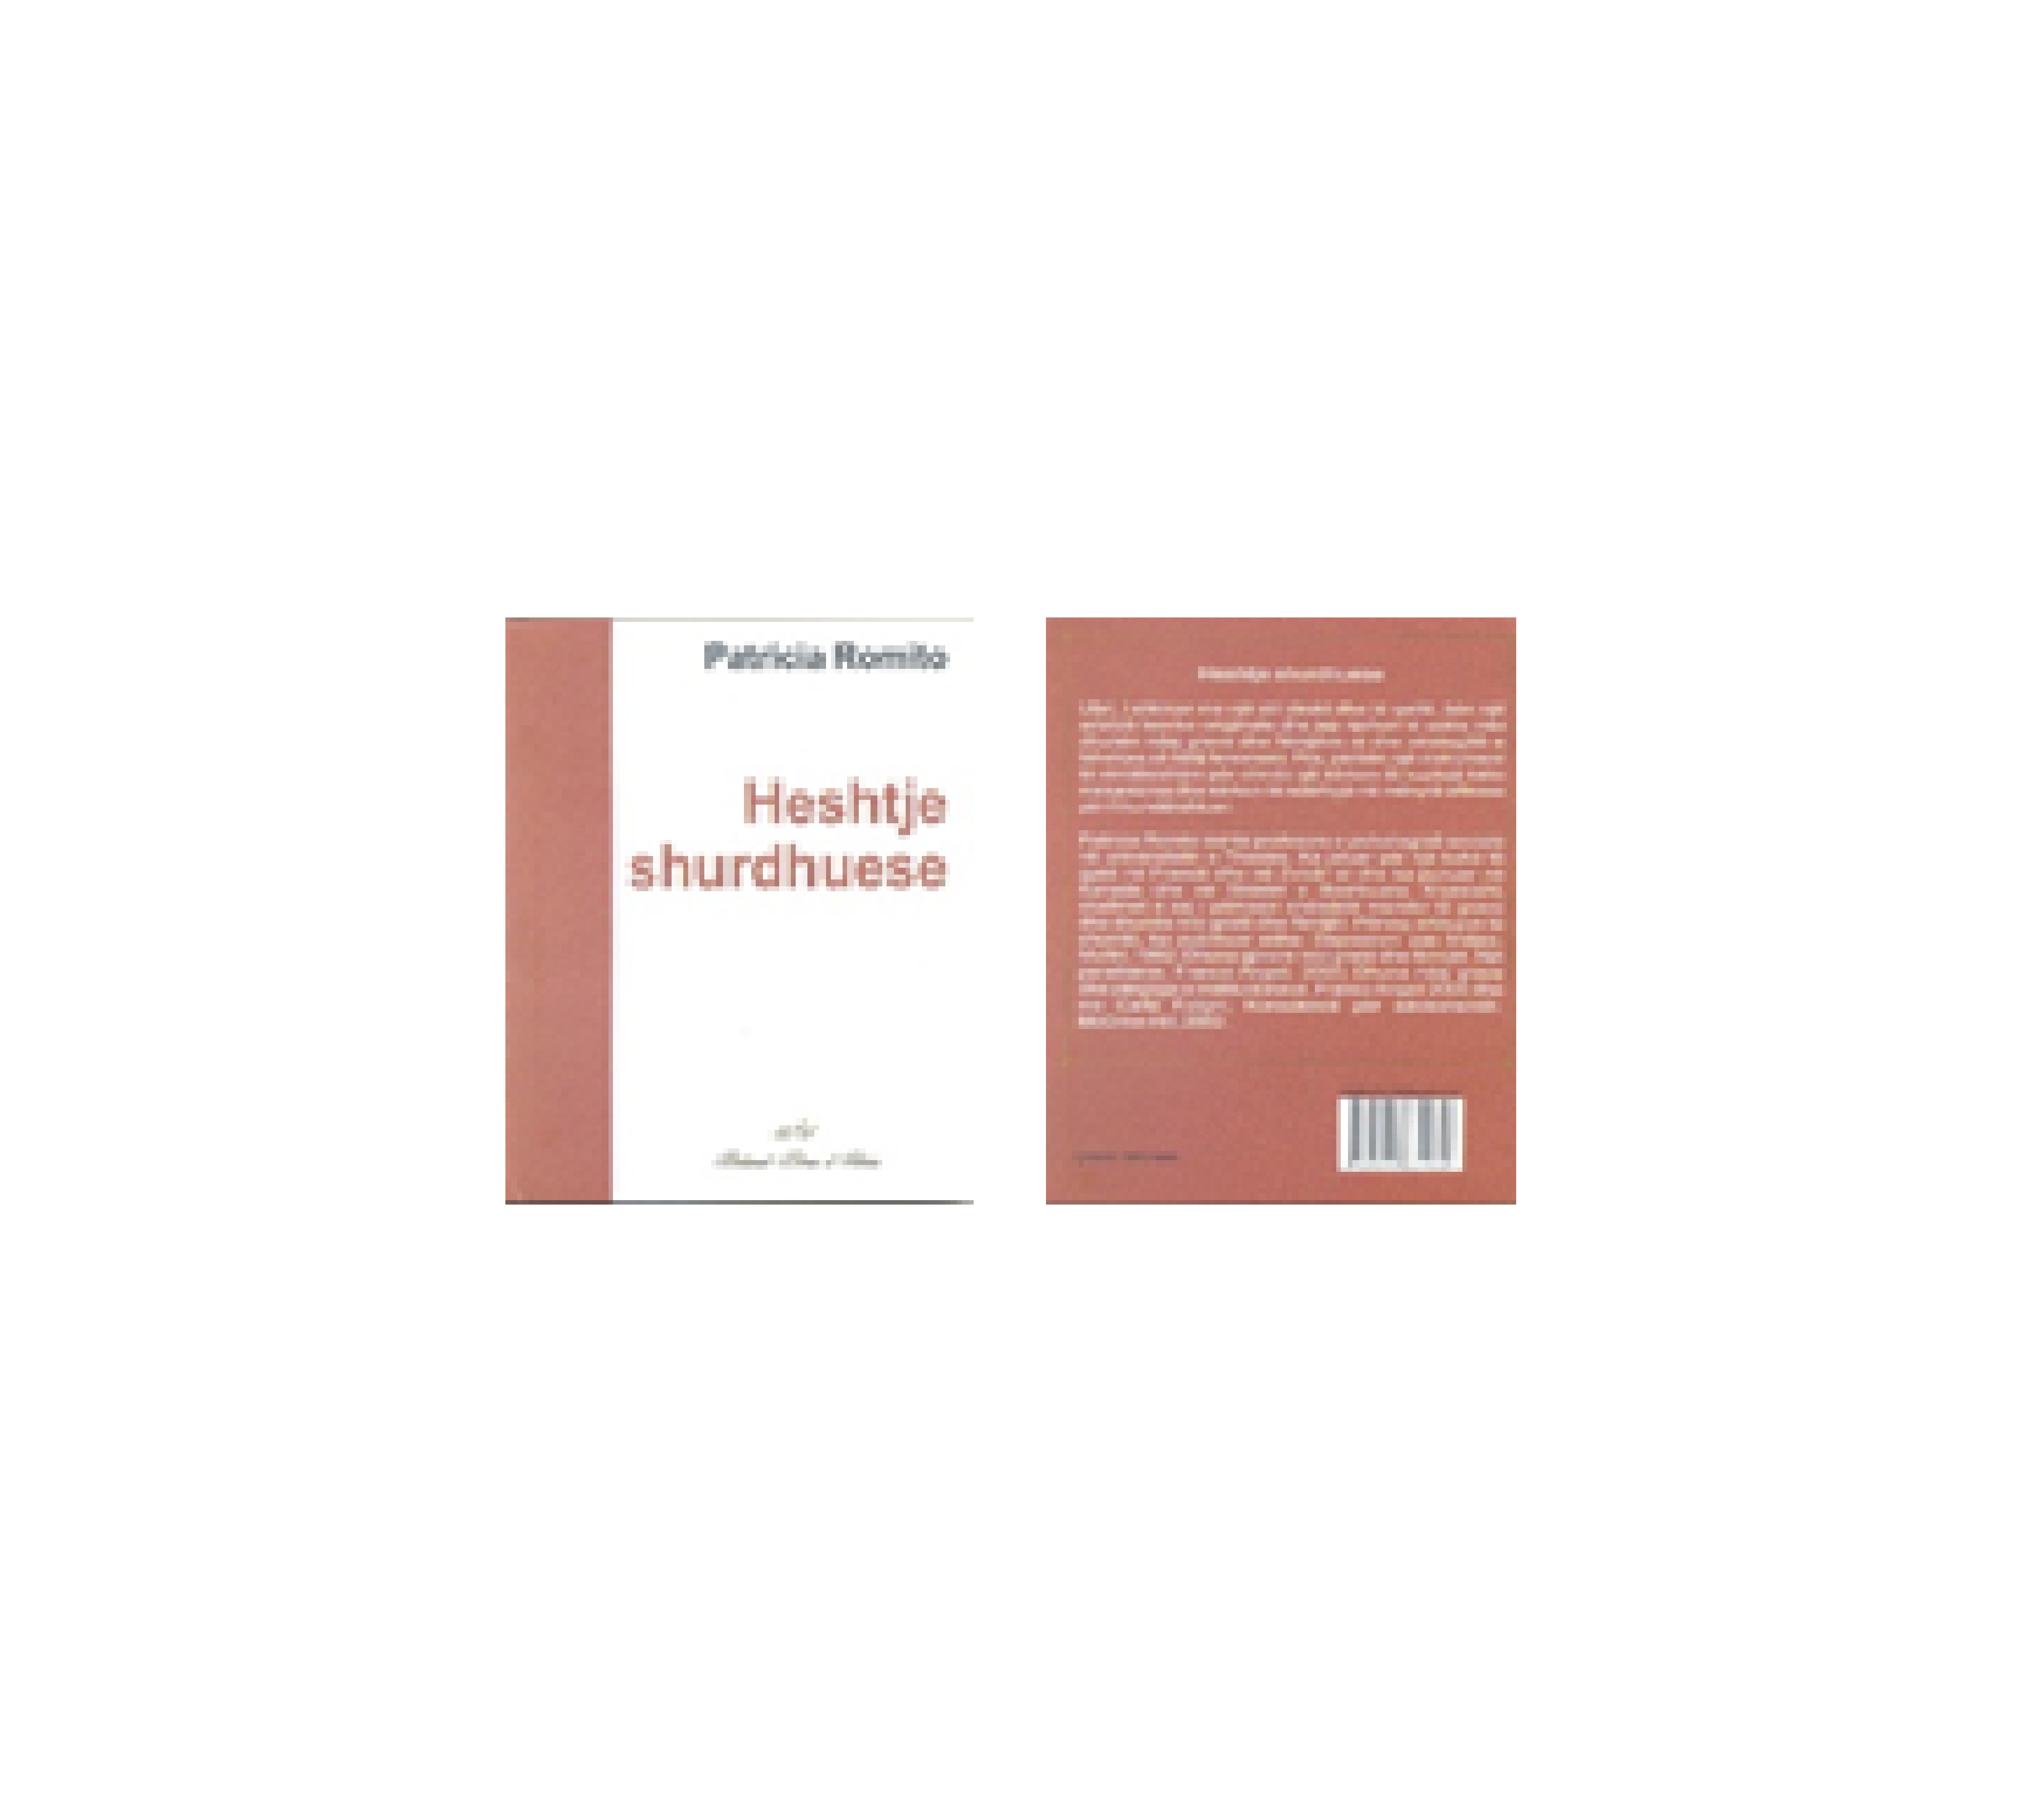 HESHTJE SHURDHUESE (A deafening silence) – Author: Patrizia Romito